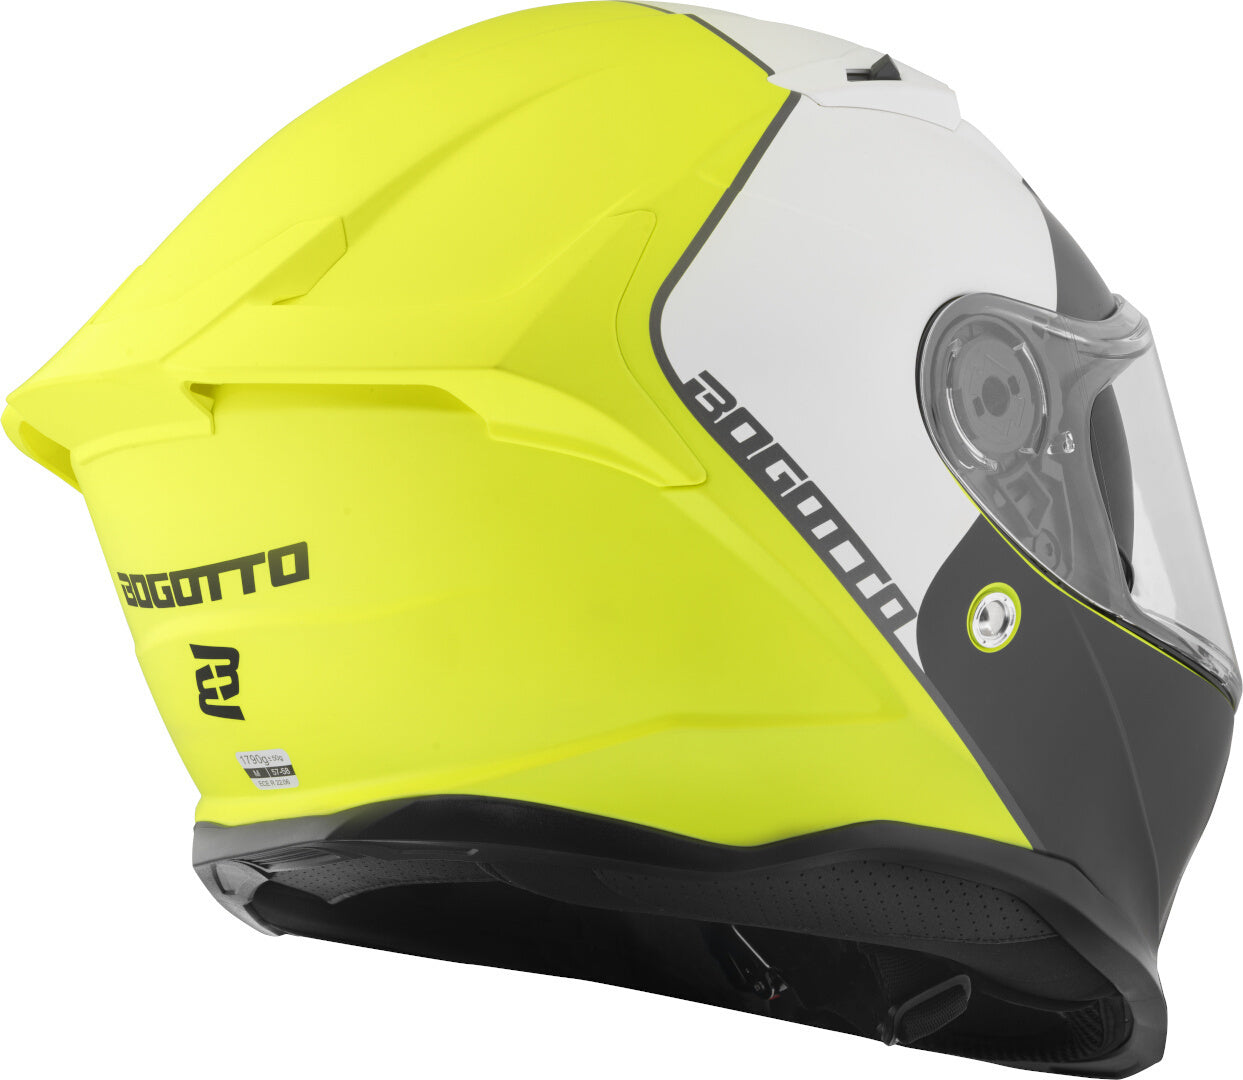 Bogotto H153 BT SPN Bluetooth Helmet#color_matt-black-yellow